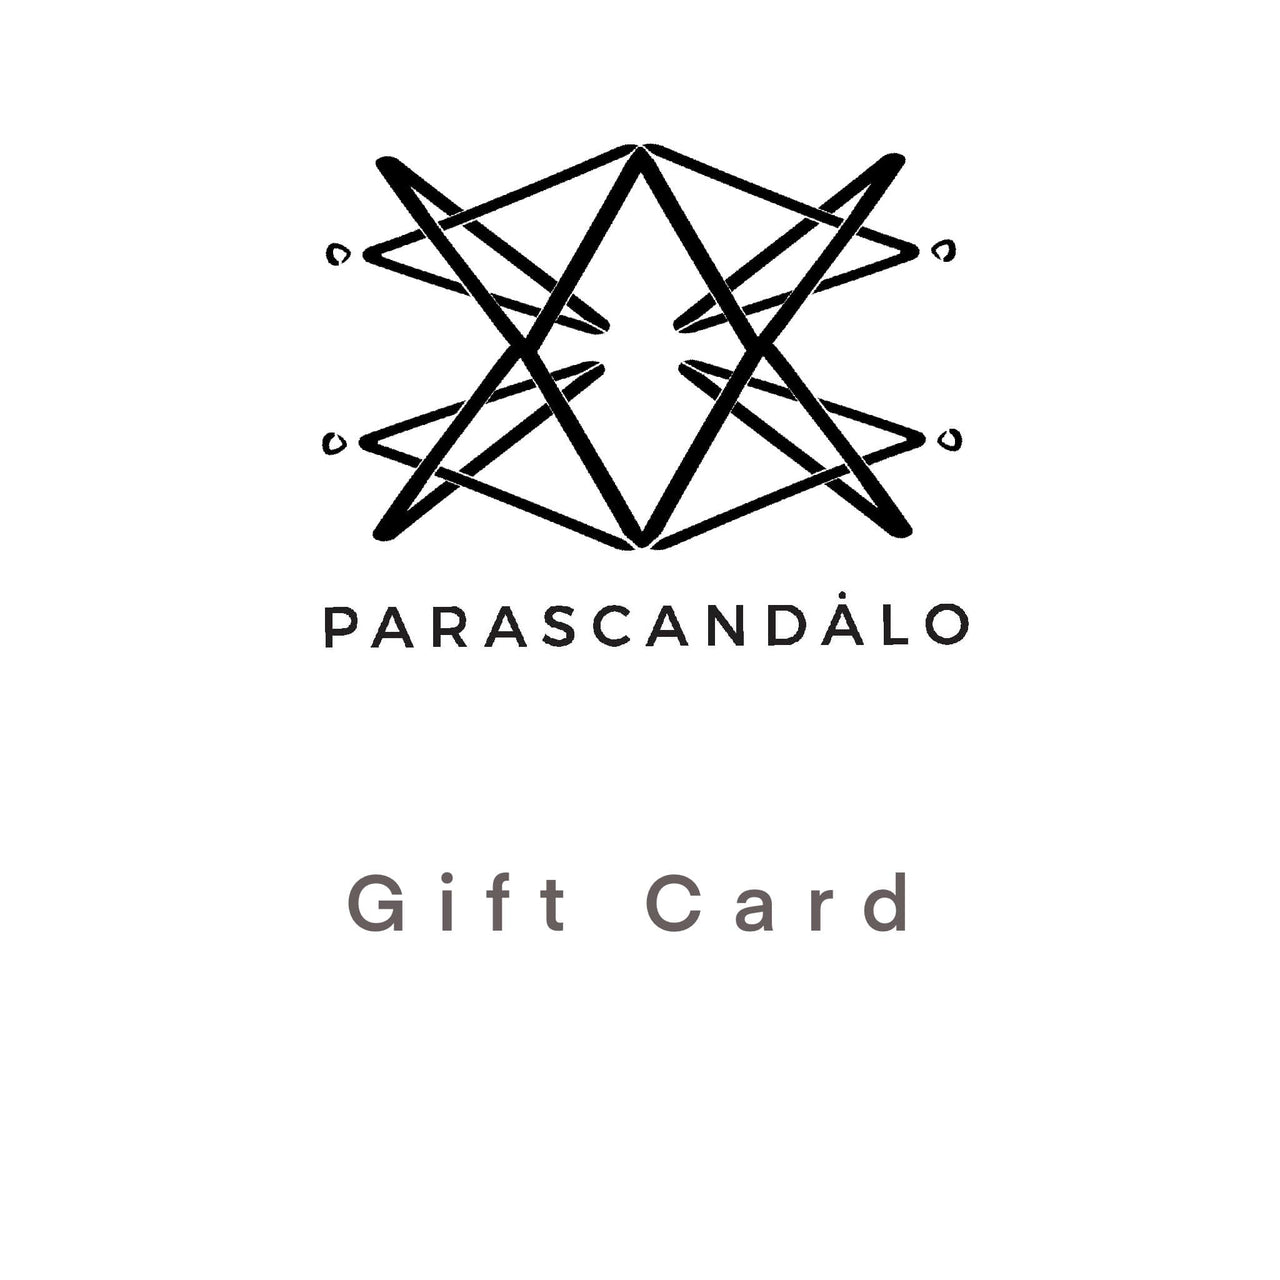 PARASCANDALO GIFT CARD